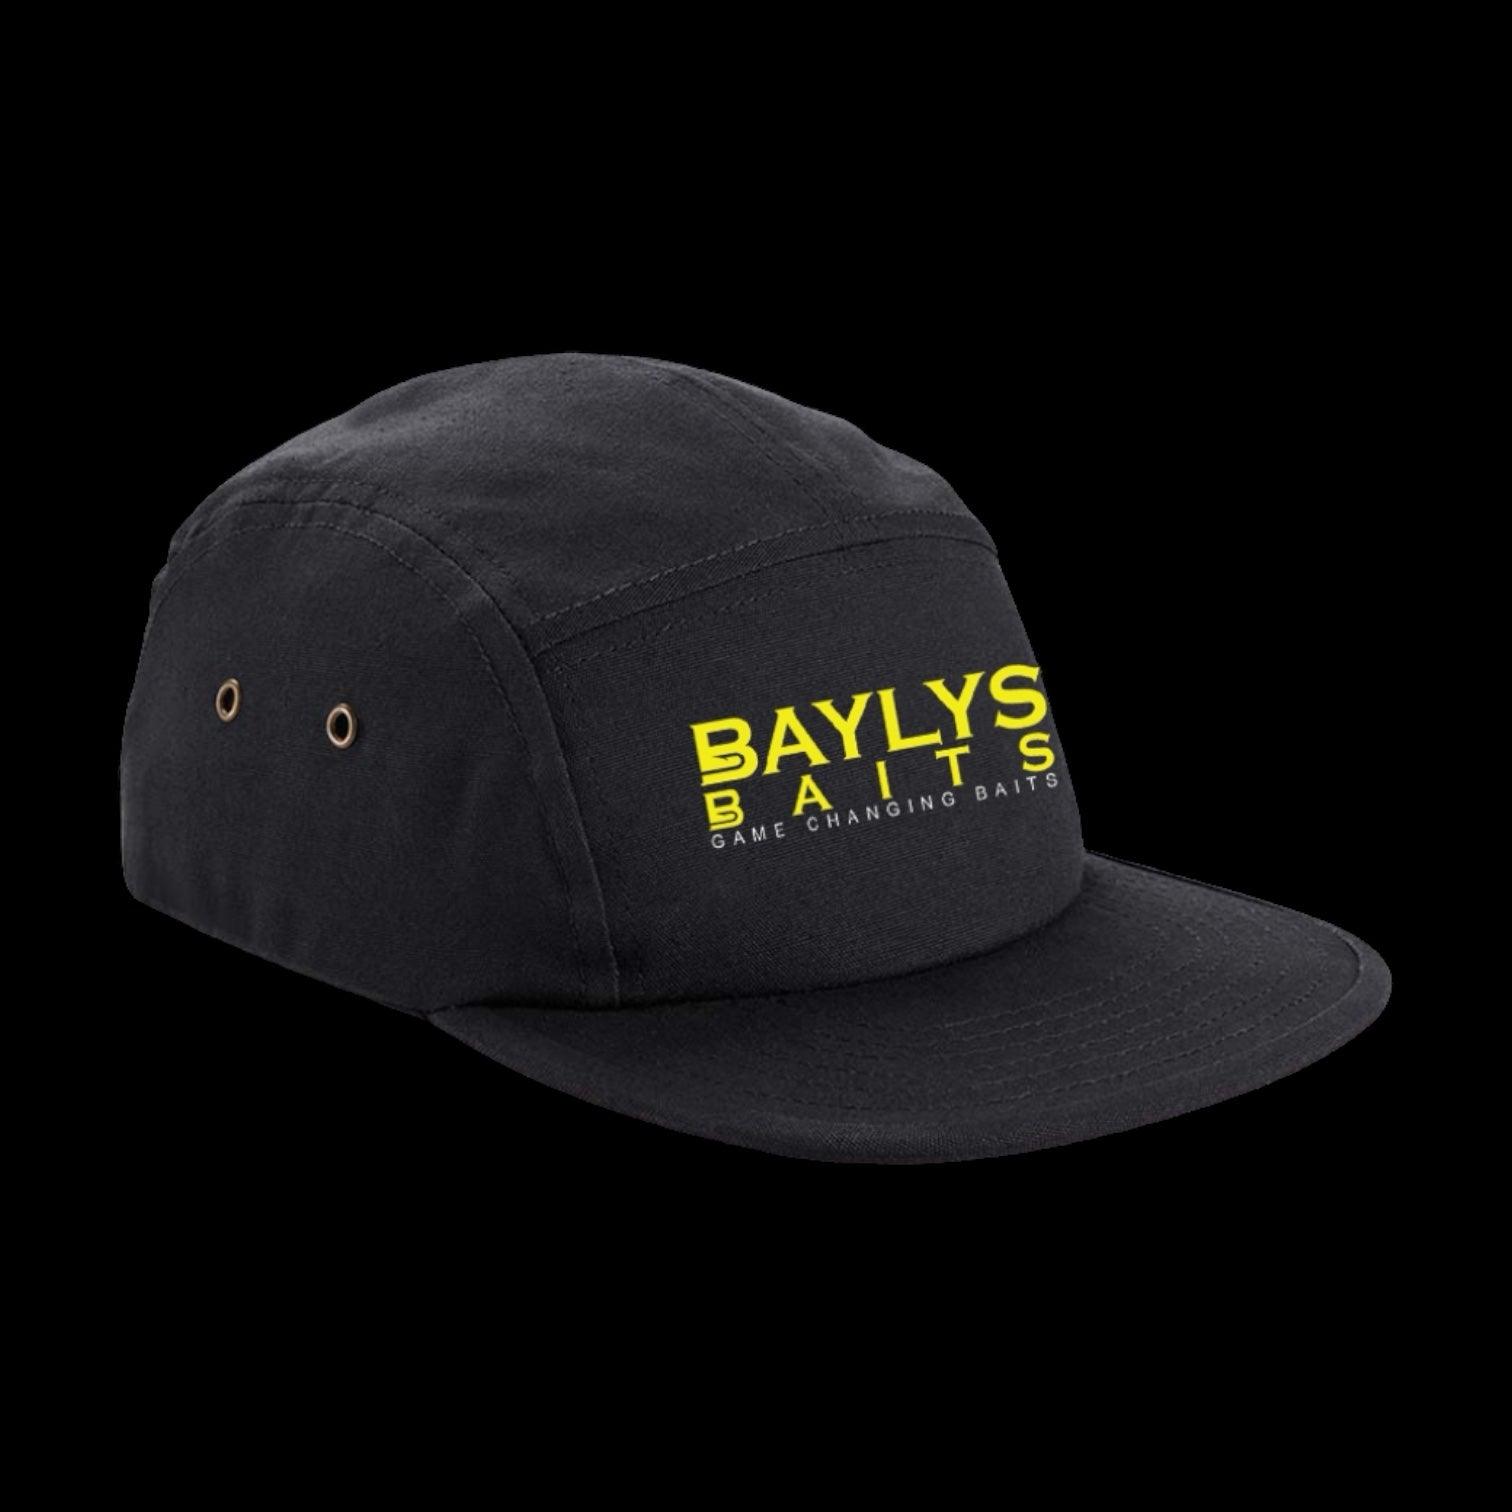 Baylys Cap - Baylys Baits 